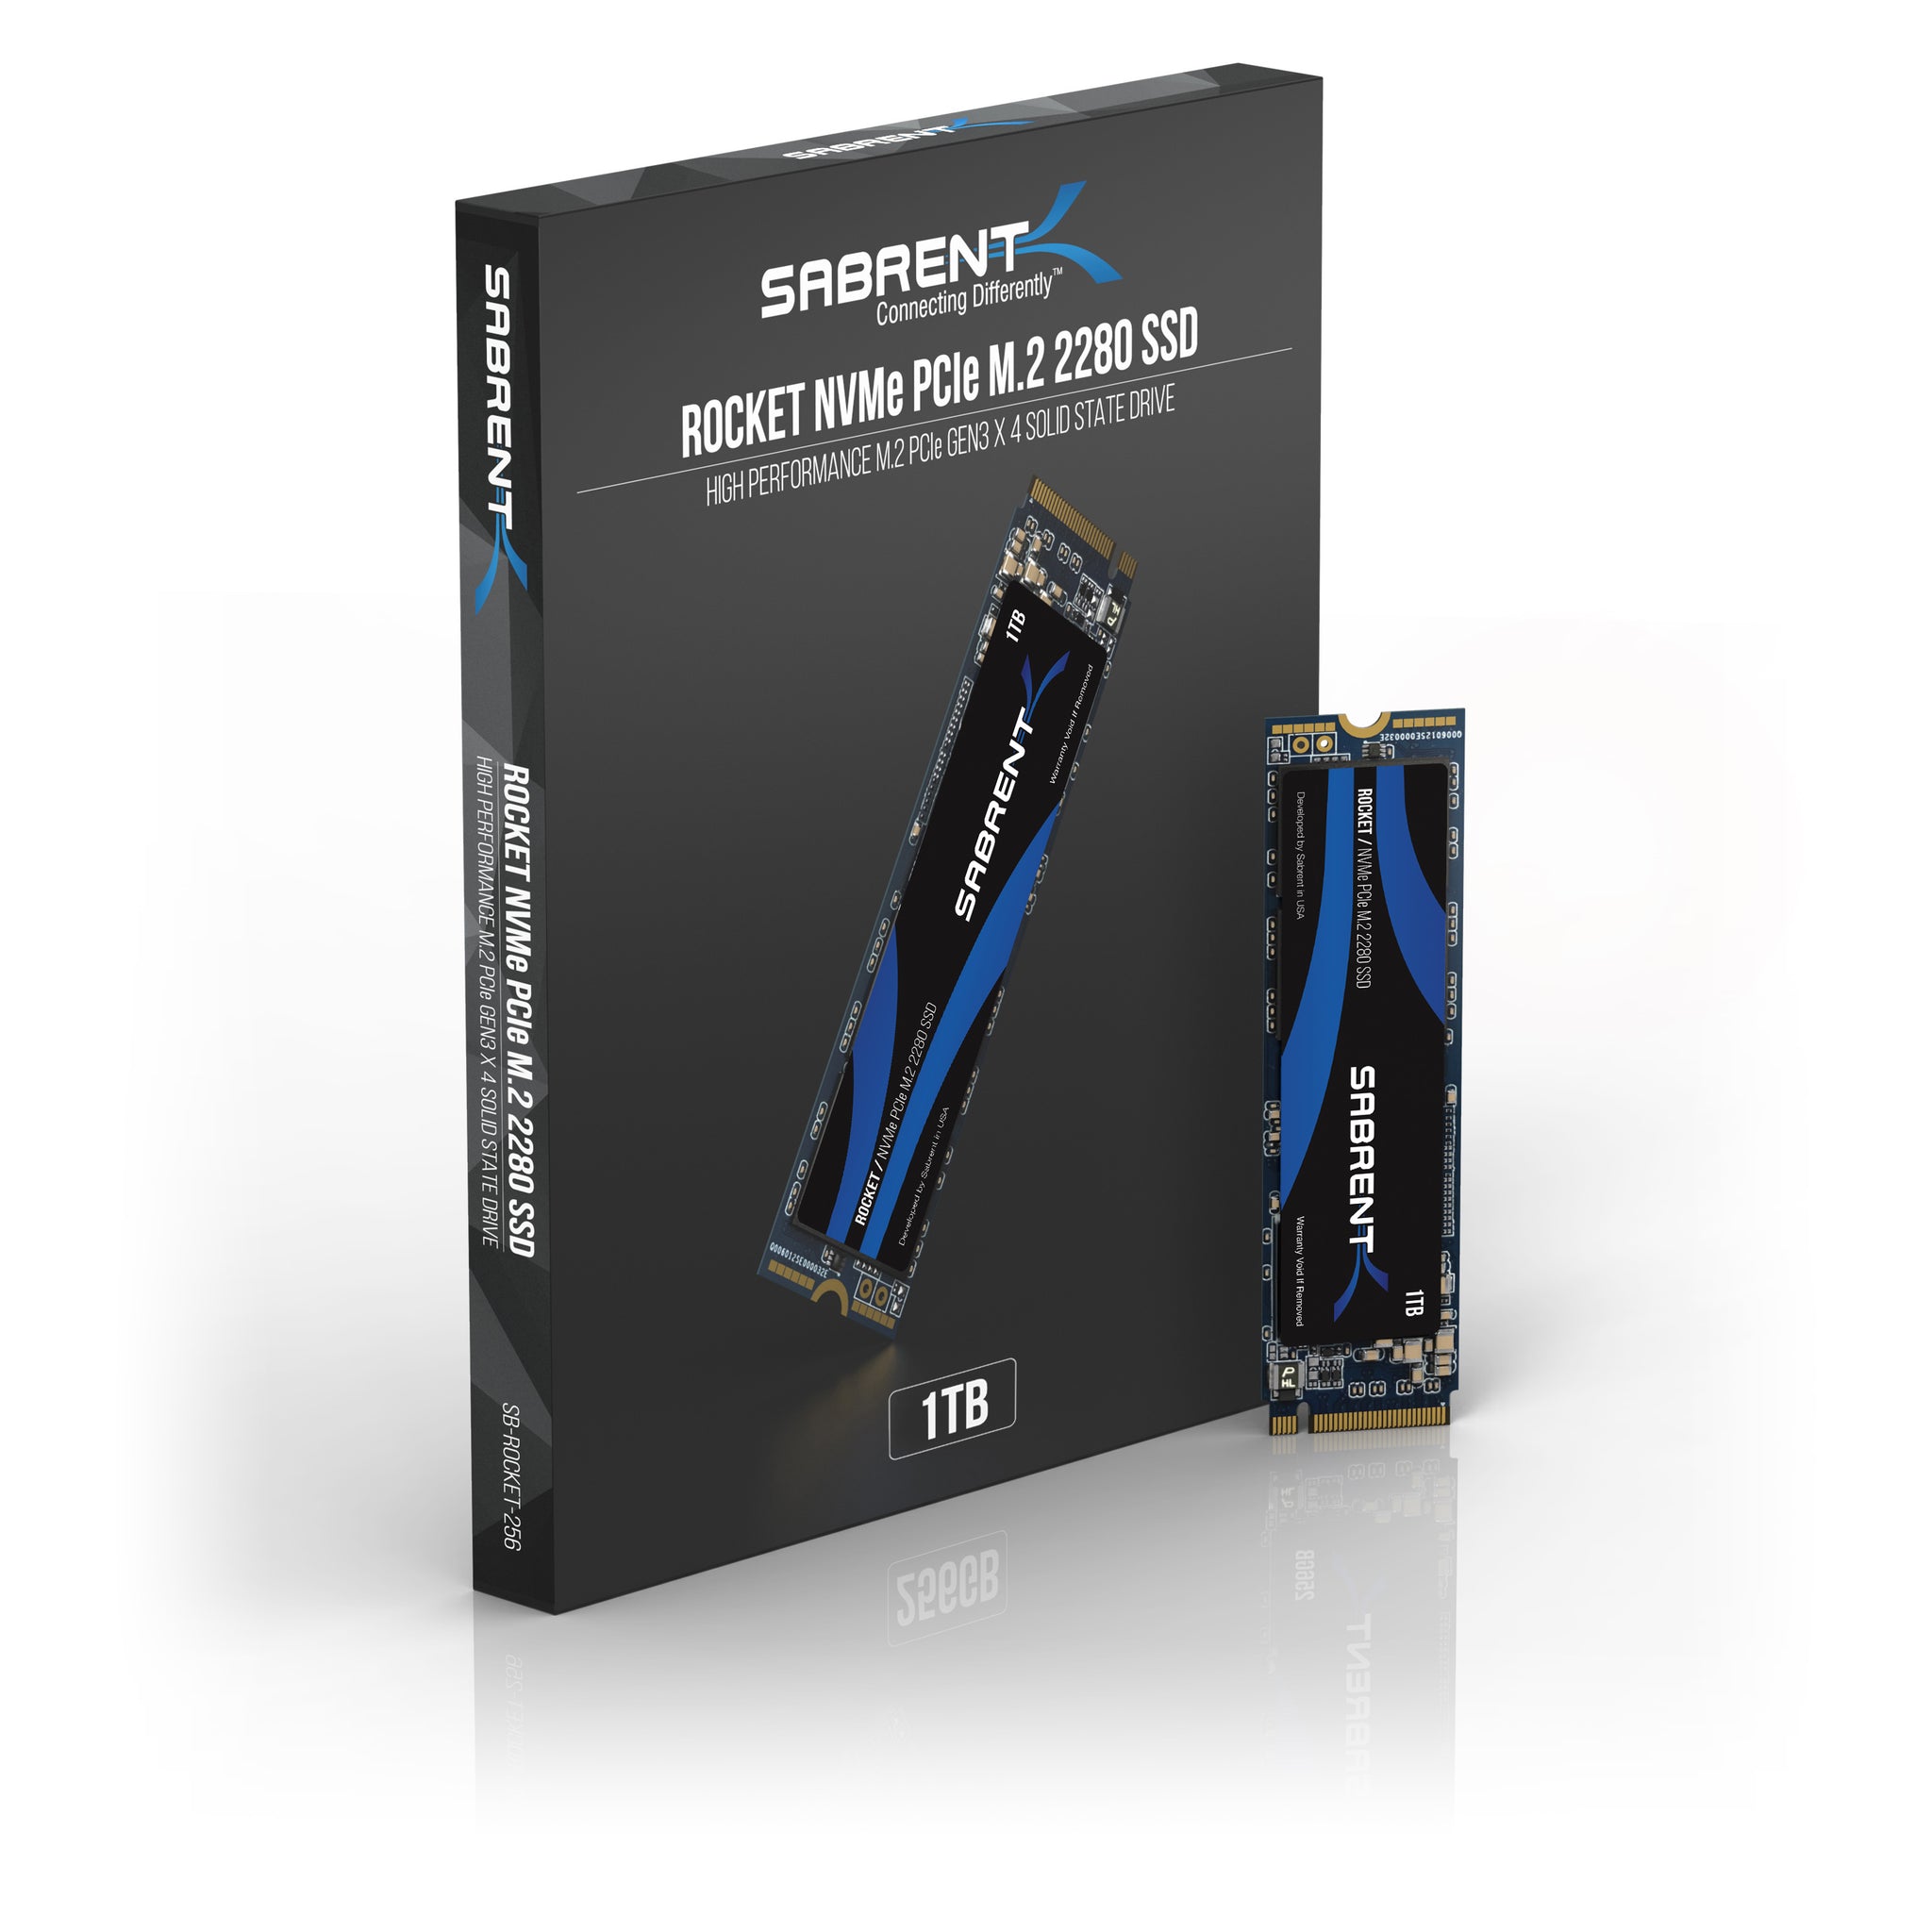 Sabrent Rocket PCIe Gen3 SSD Review 